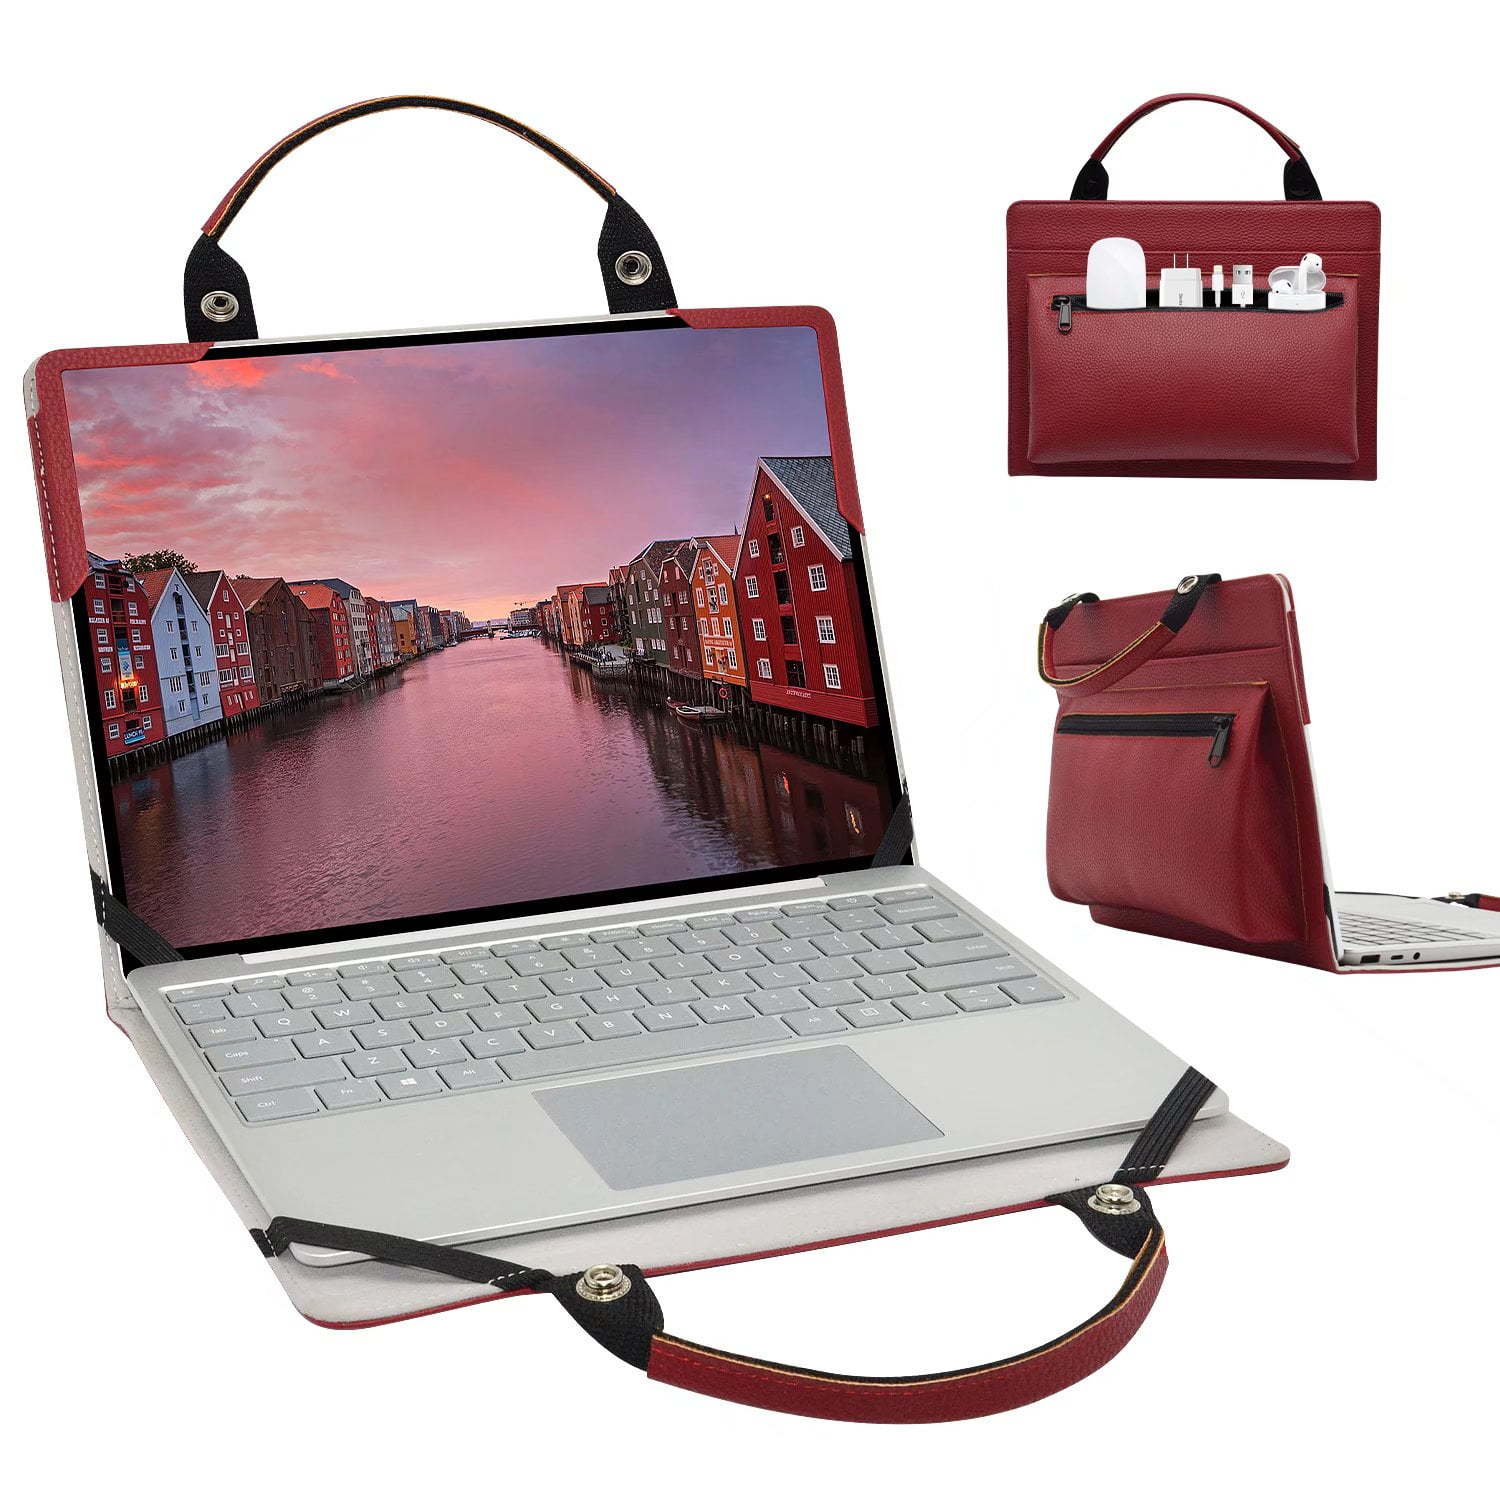 Carrying Bag Sleeve Case For 13.3“ LENOVO IdeaPad ThinkPad Yoga Notebook Laptop 